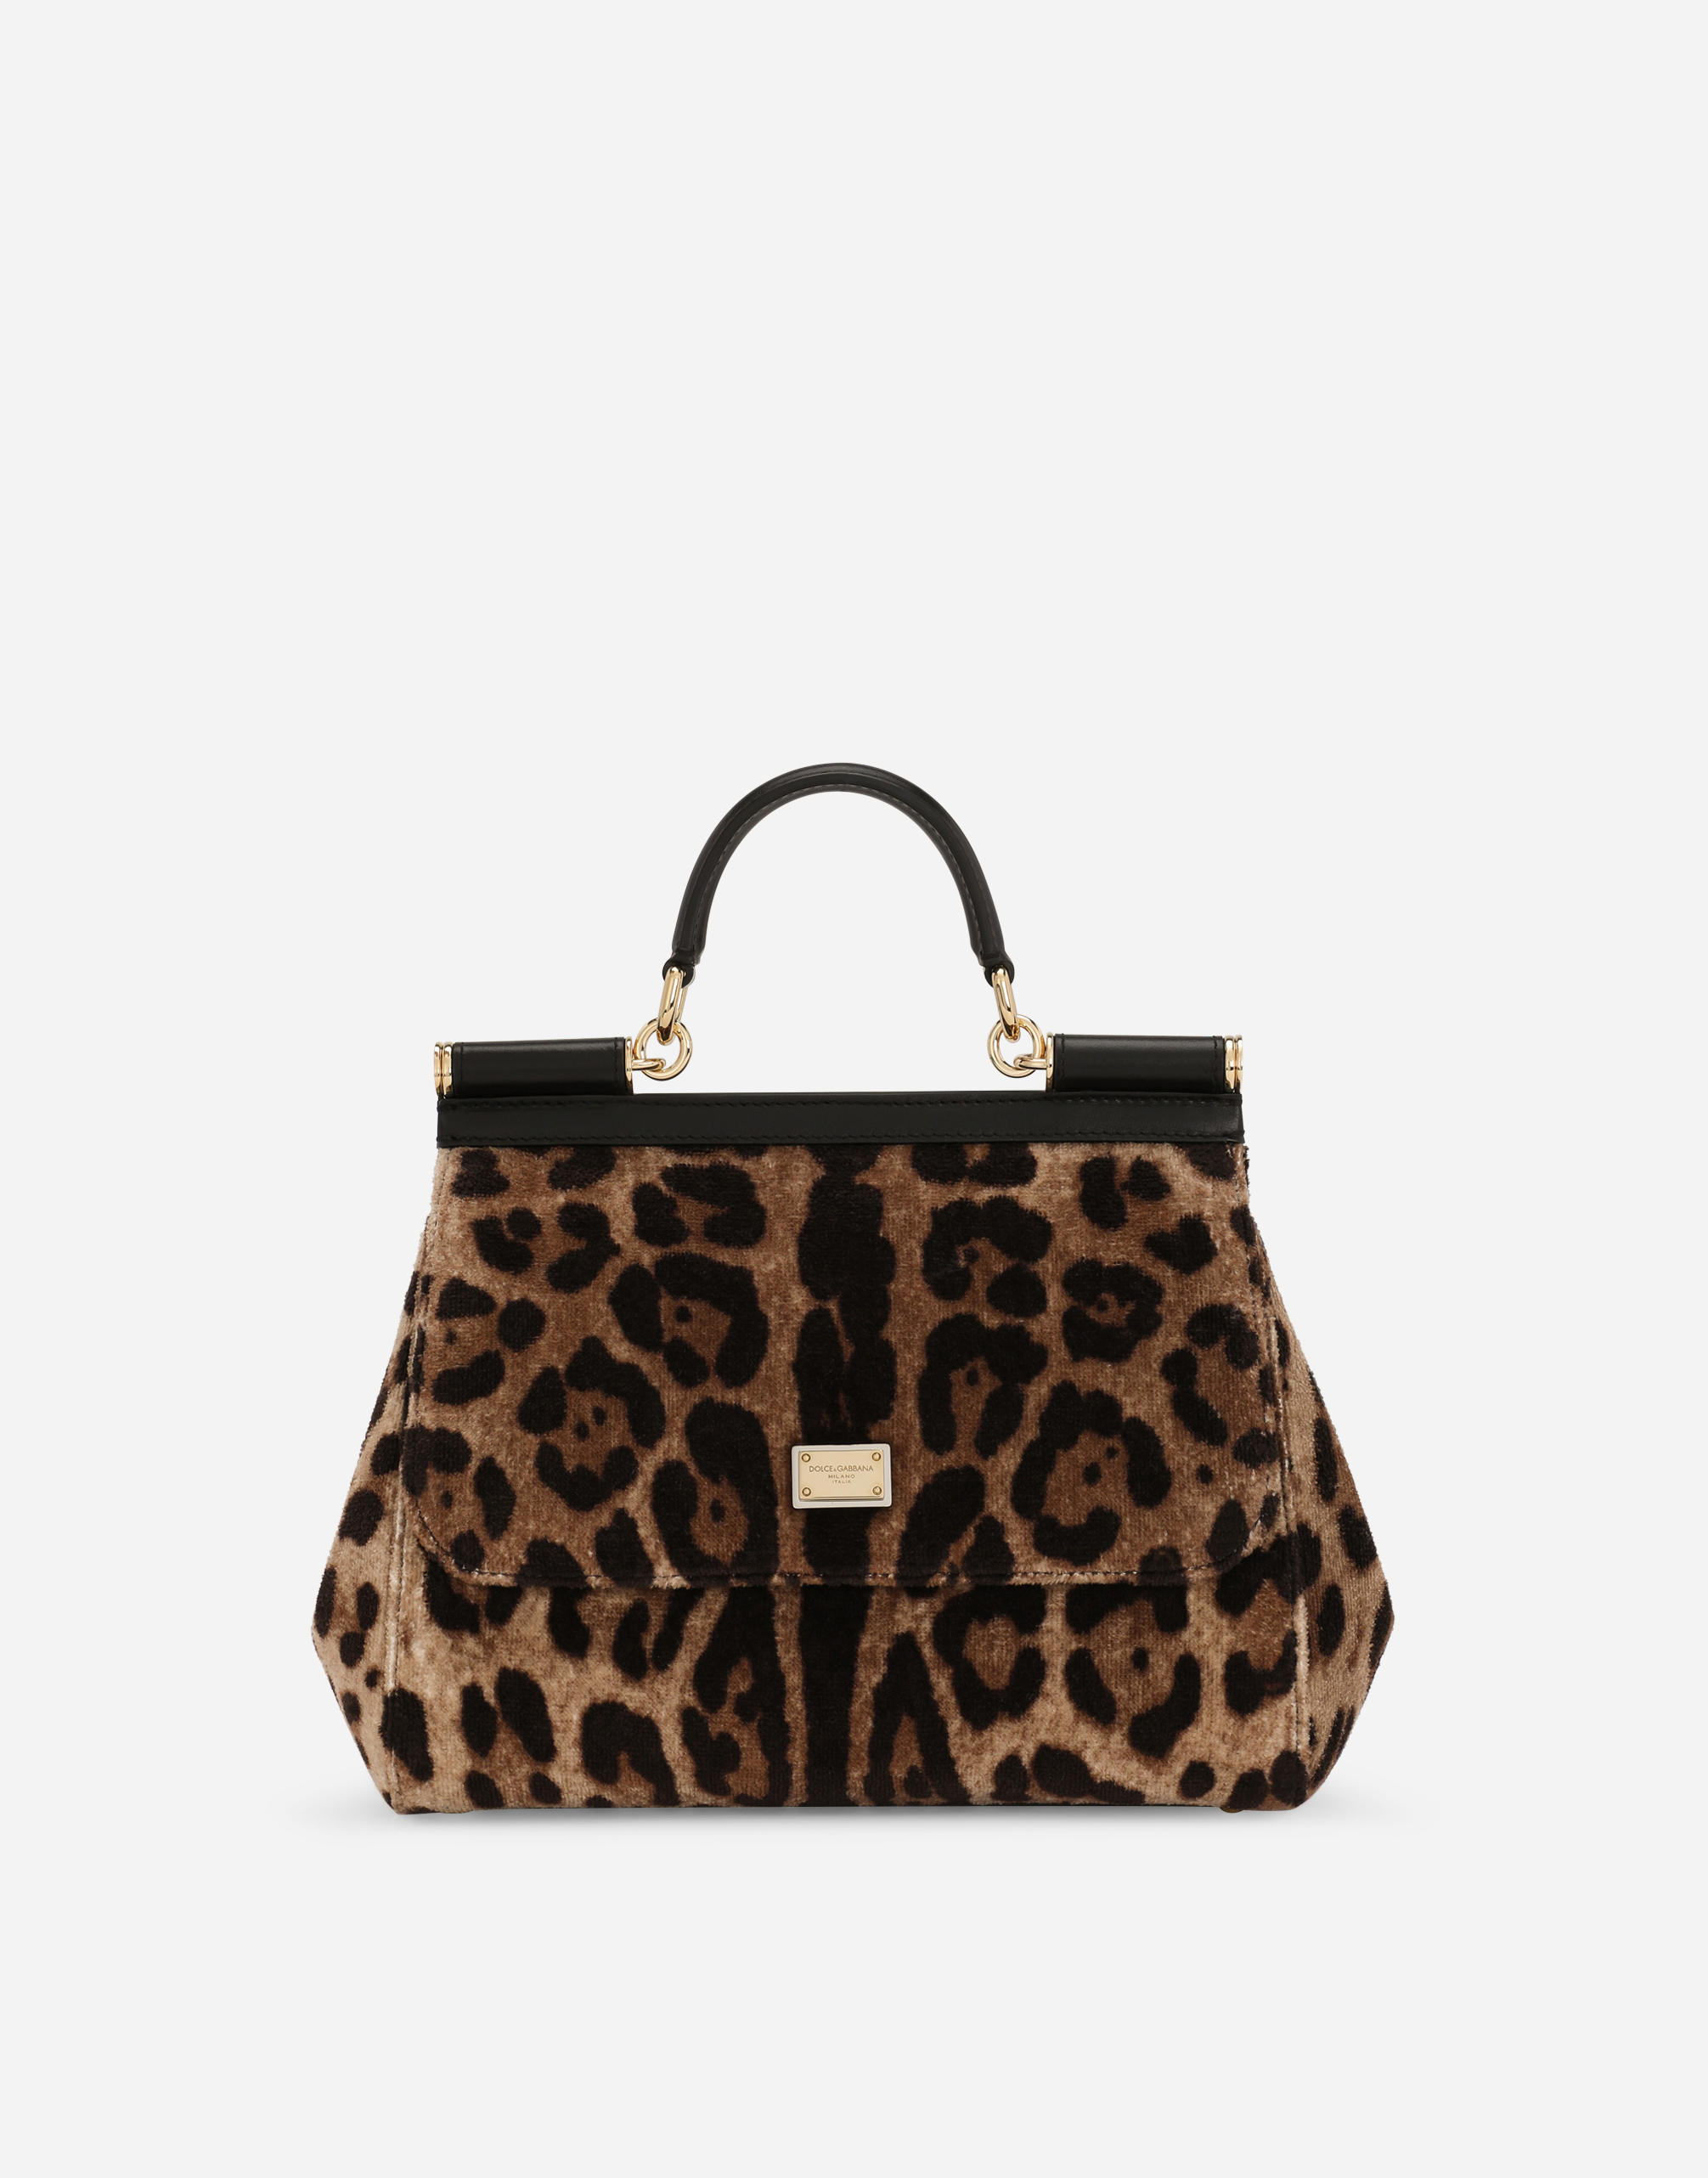 Louis Vuitton Leopard Silk Front Cardigan